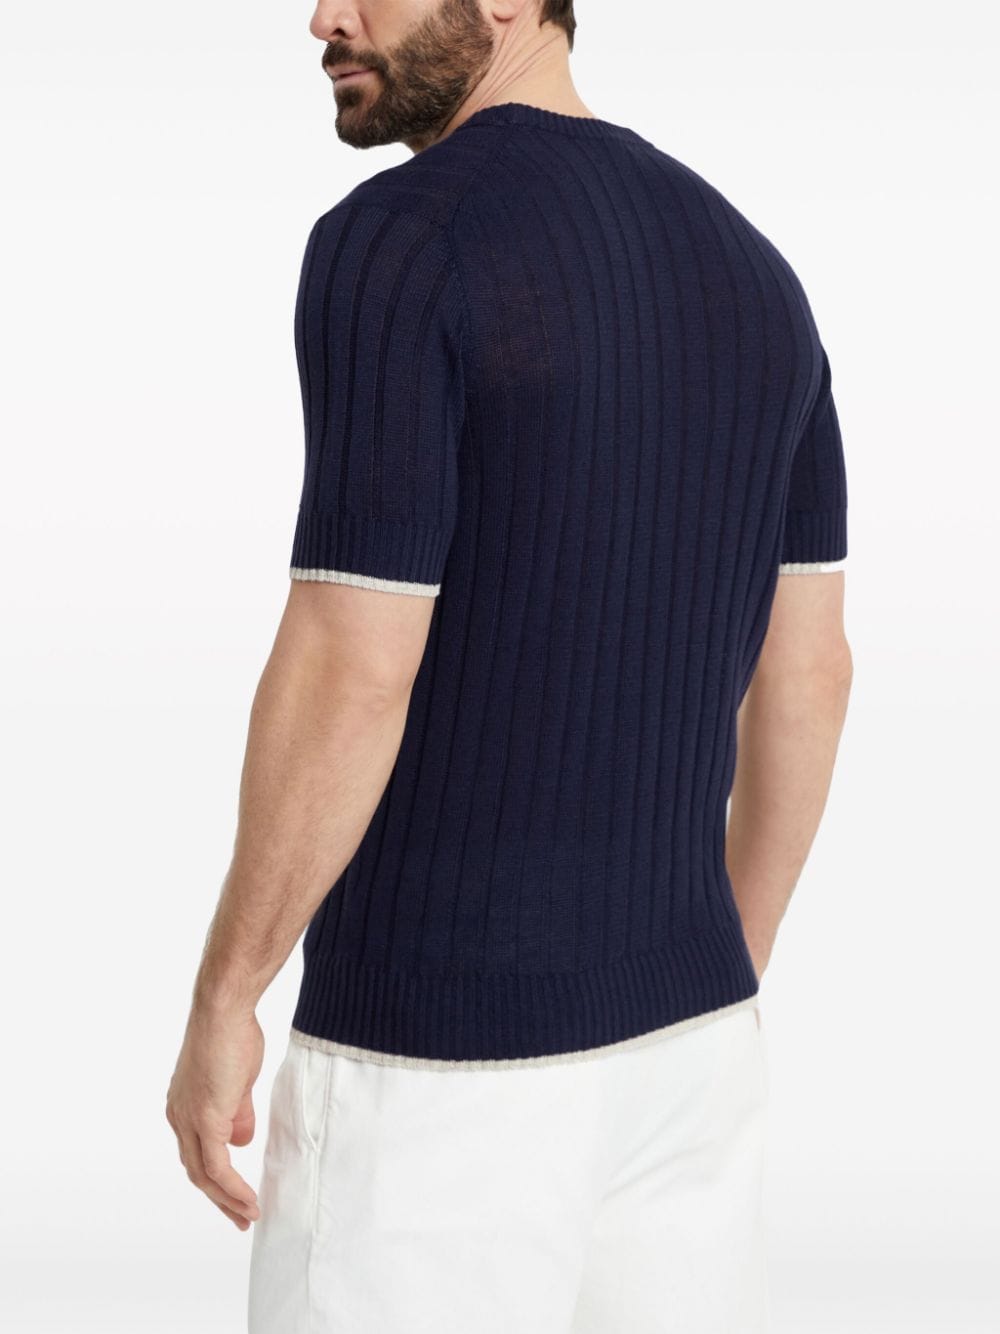 Blue knitted T-shirt